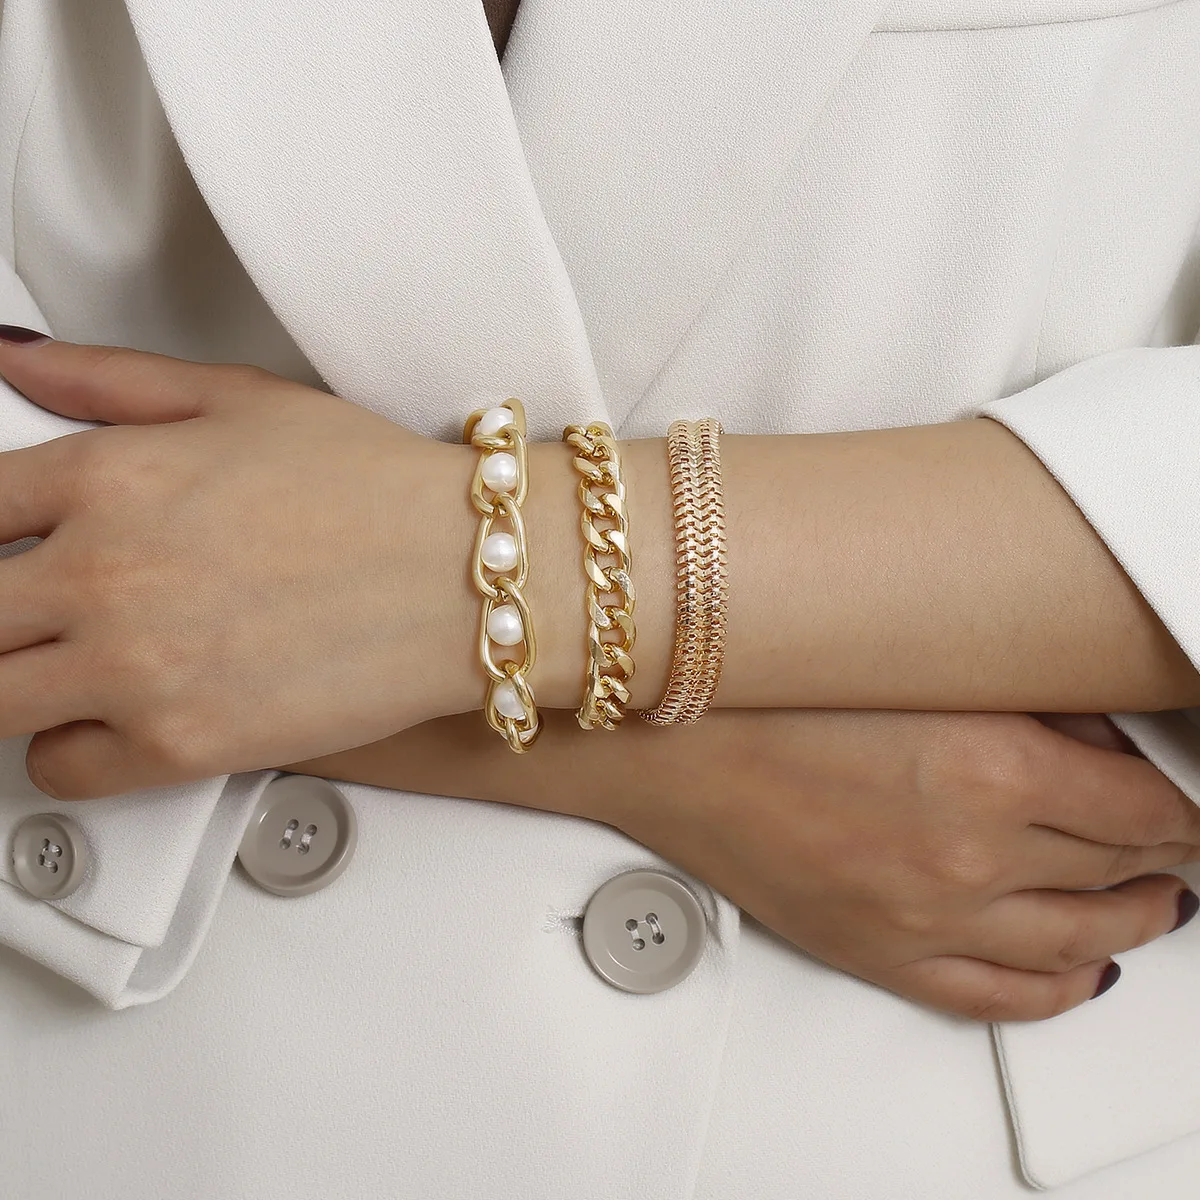 

Vintage Hip Hop Imitation Pearls Chain Bracelet Sets For Women Fashion Multilayer Gold Color Charm Bracelets Bangles Jewerly